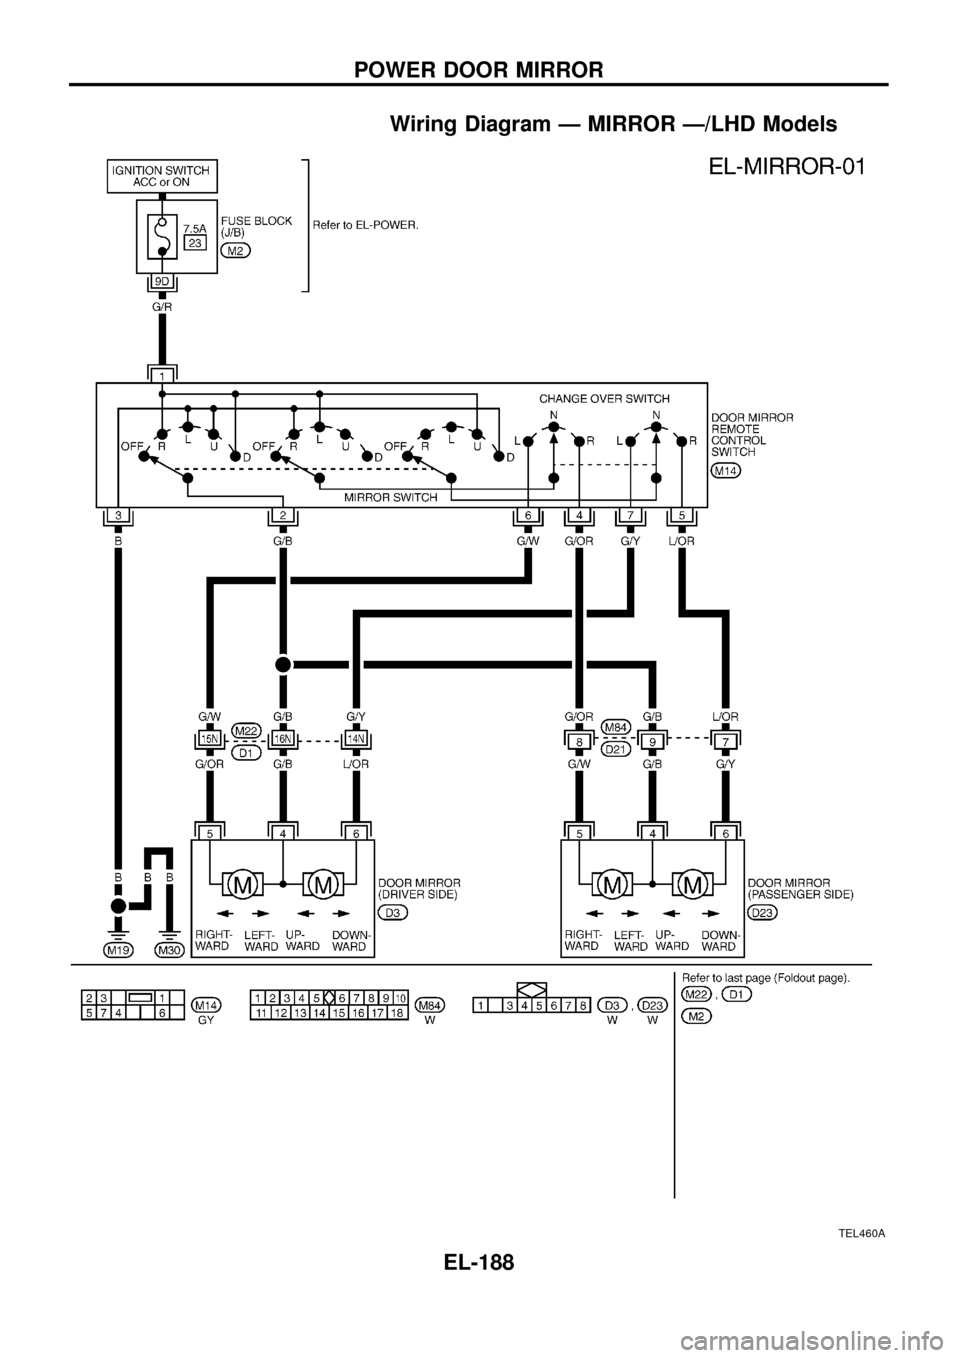 NISSAN PATROL 1998 Y61 / 5.G Electrical System Workshop Manual Wiring Diagram Ð MIRROR Ð/LHD Models
TEL460A
POWER DOOR MIRROR
EL-188 